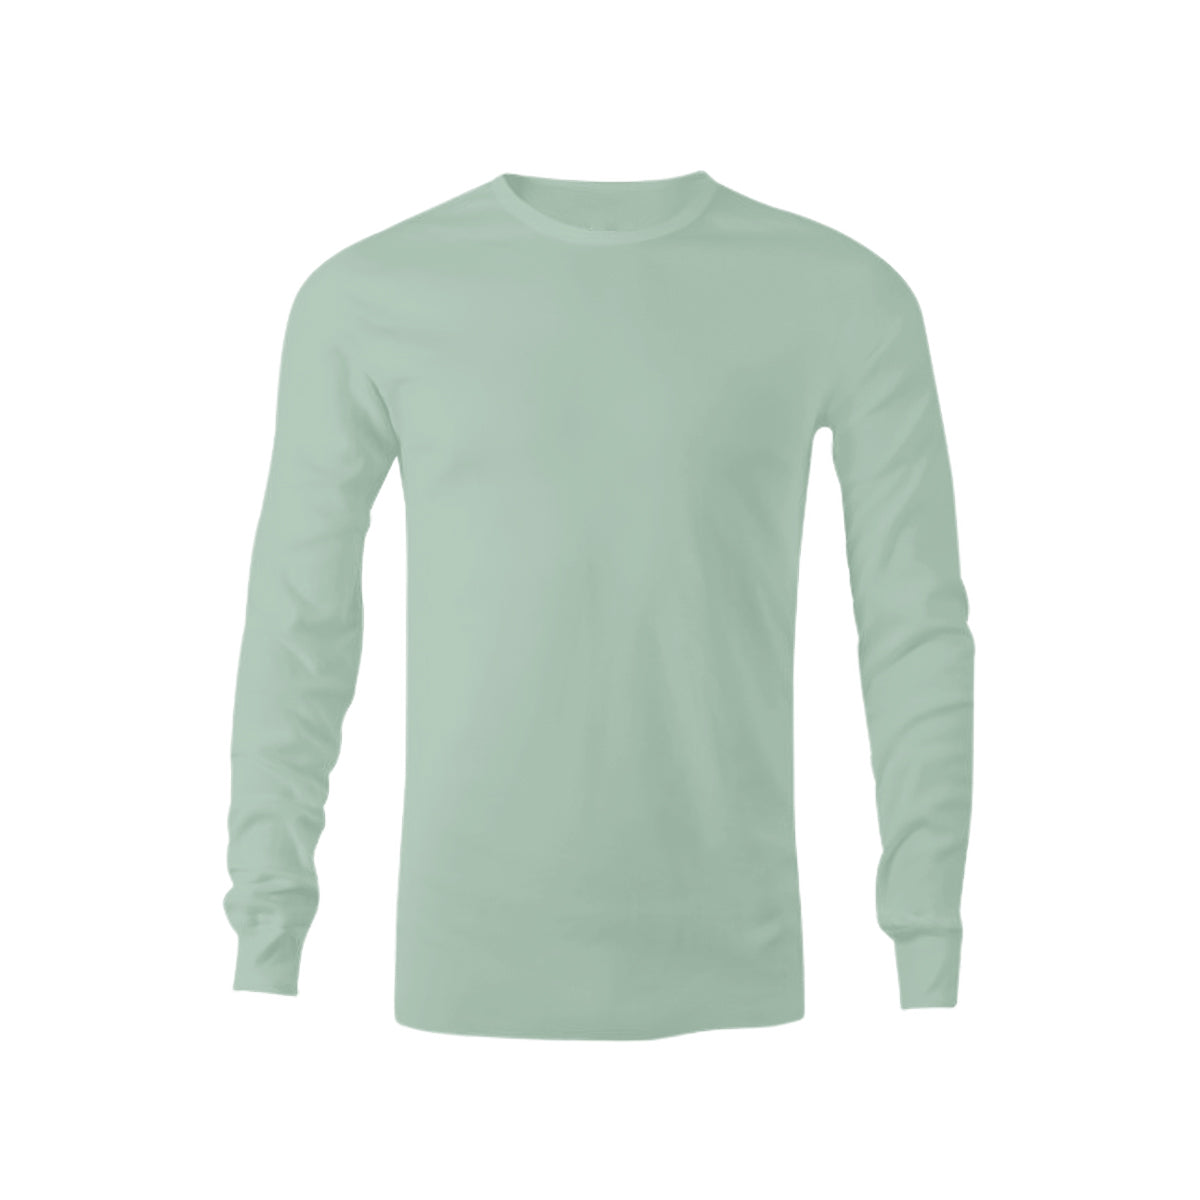 HercShirt 3.0 Max - The World's Cleanest Long Sleeve Shirt